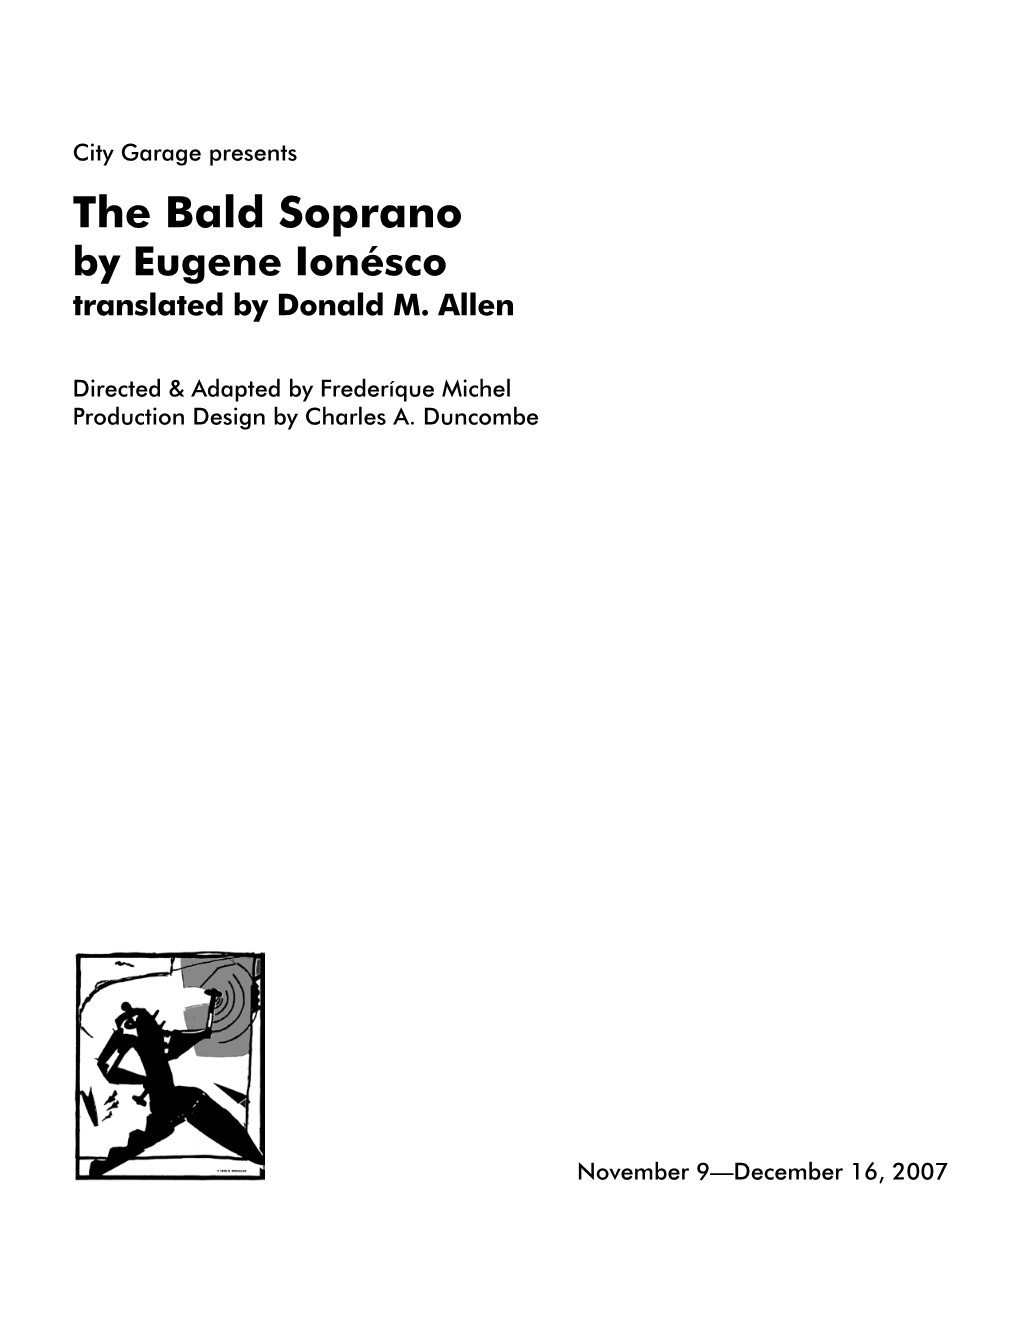 The Bald Soprano Program